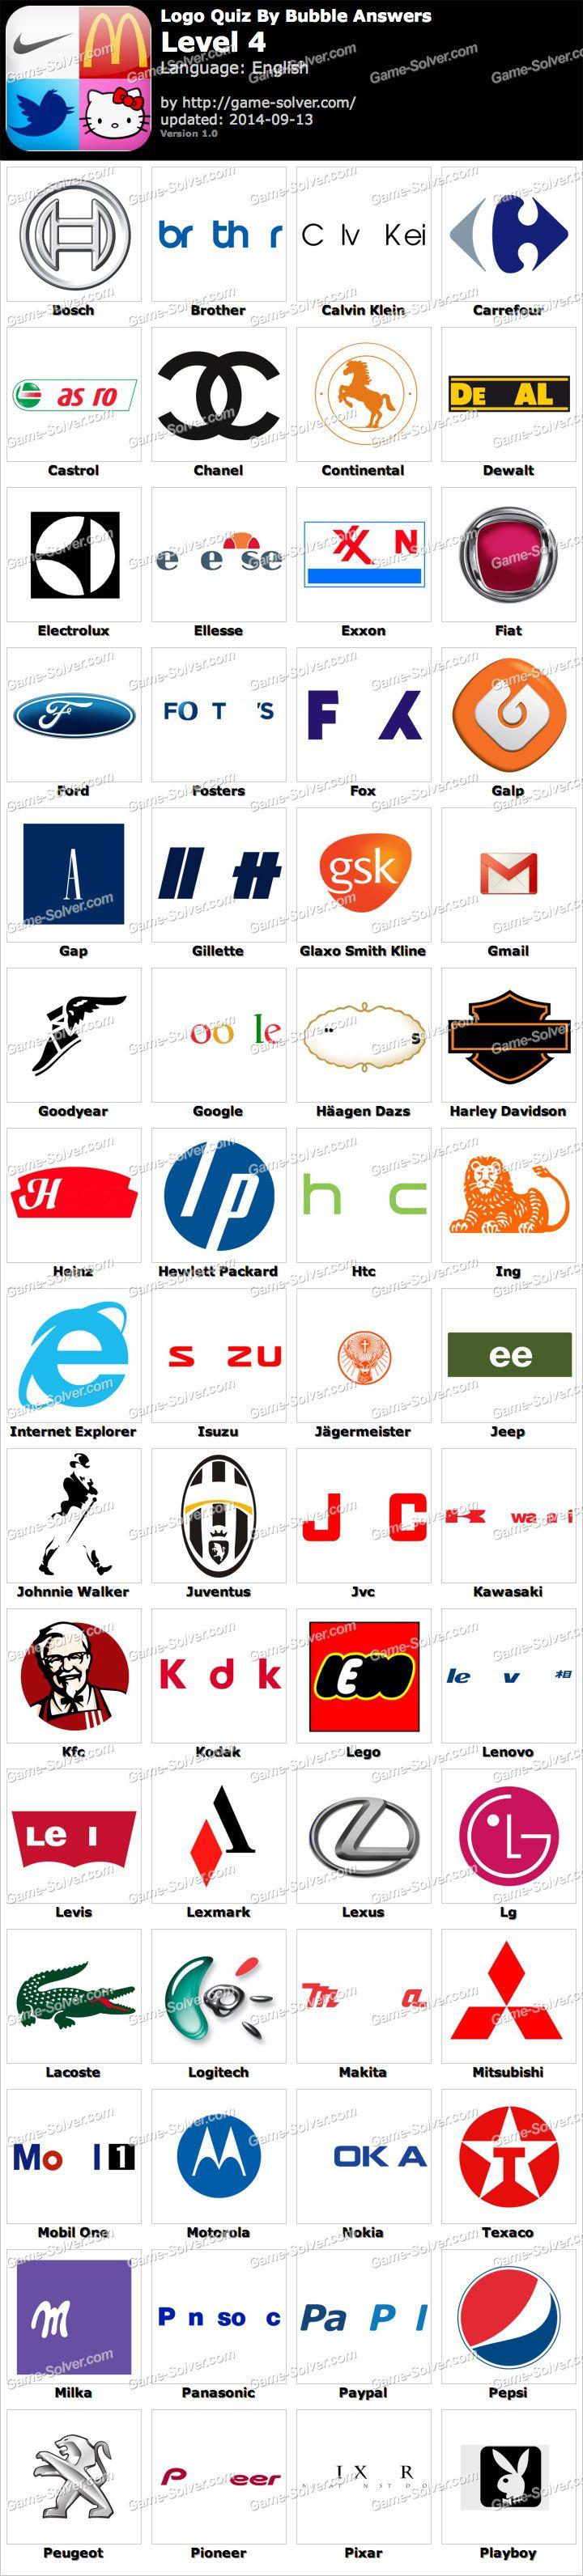 Japanese Electronics Company Logo - Japanese Electronics Corp Manufactures Logos - Great Installation Of ...